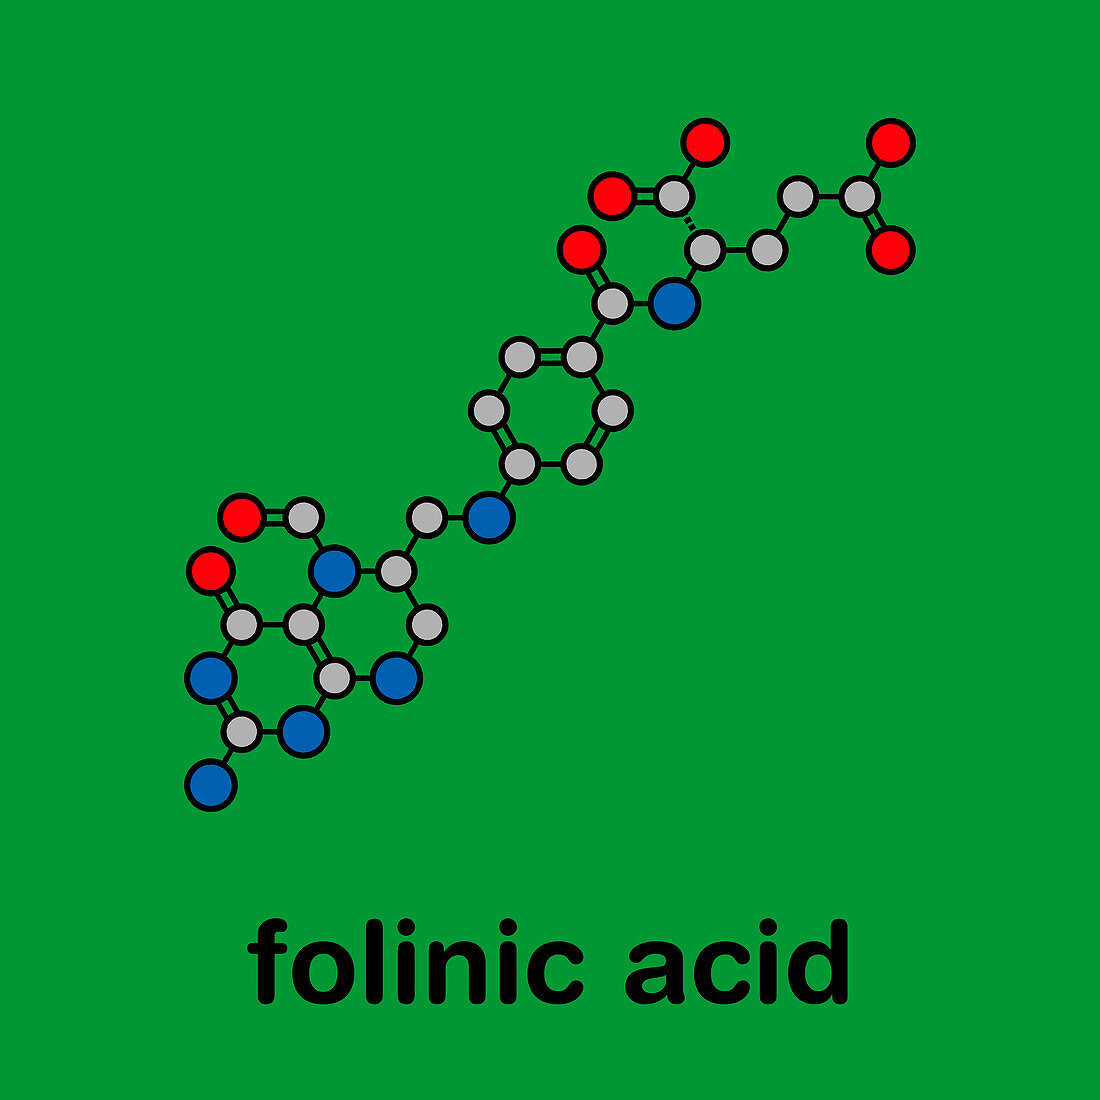 Folinic acid chemotherapy drug, molecular model